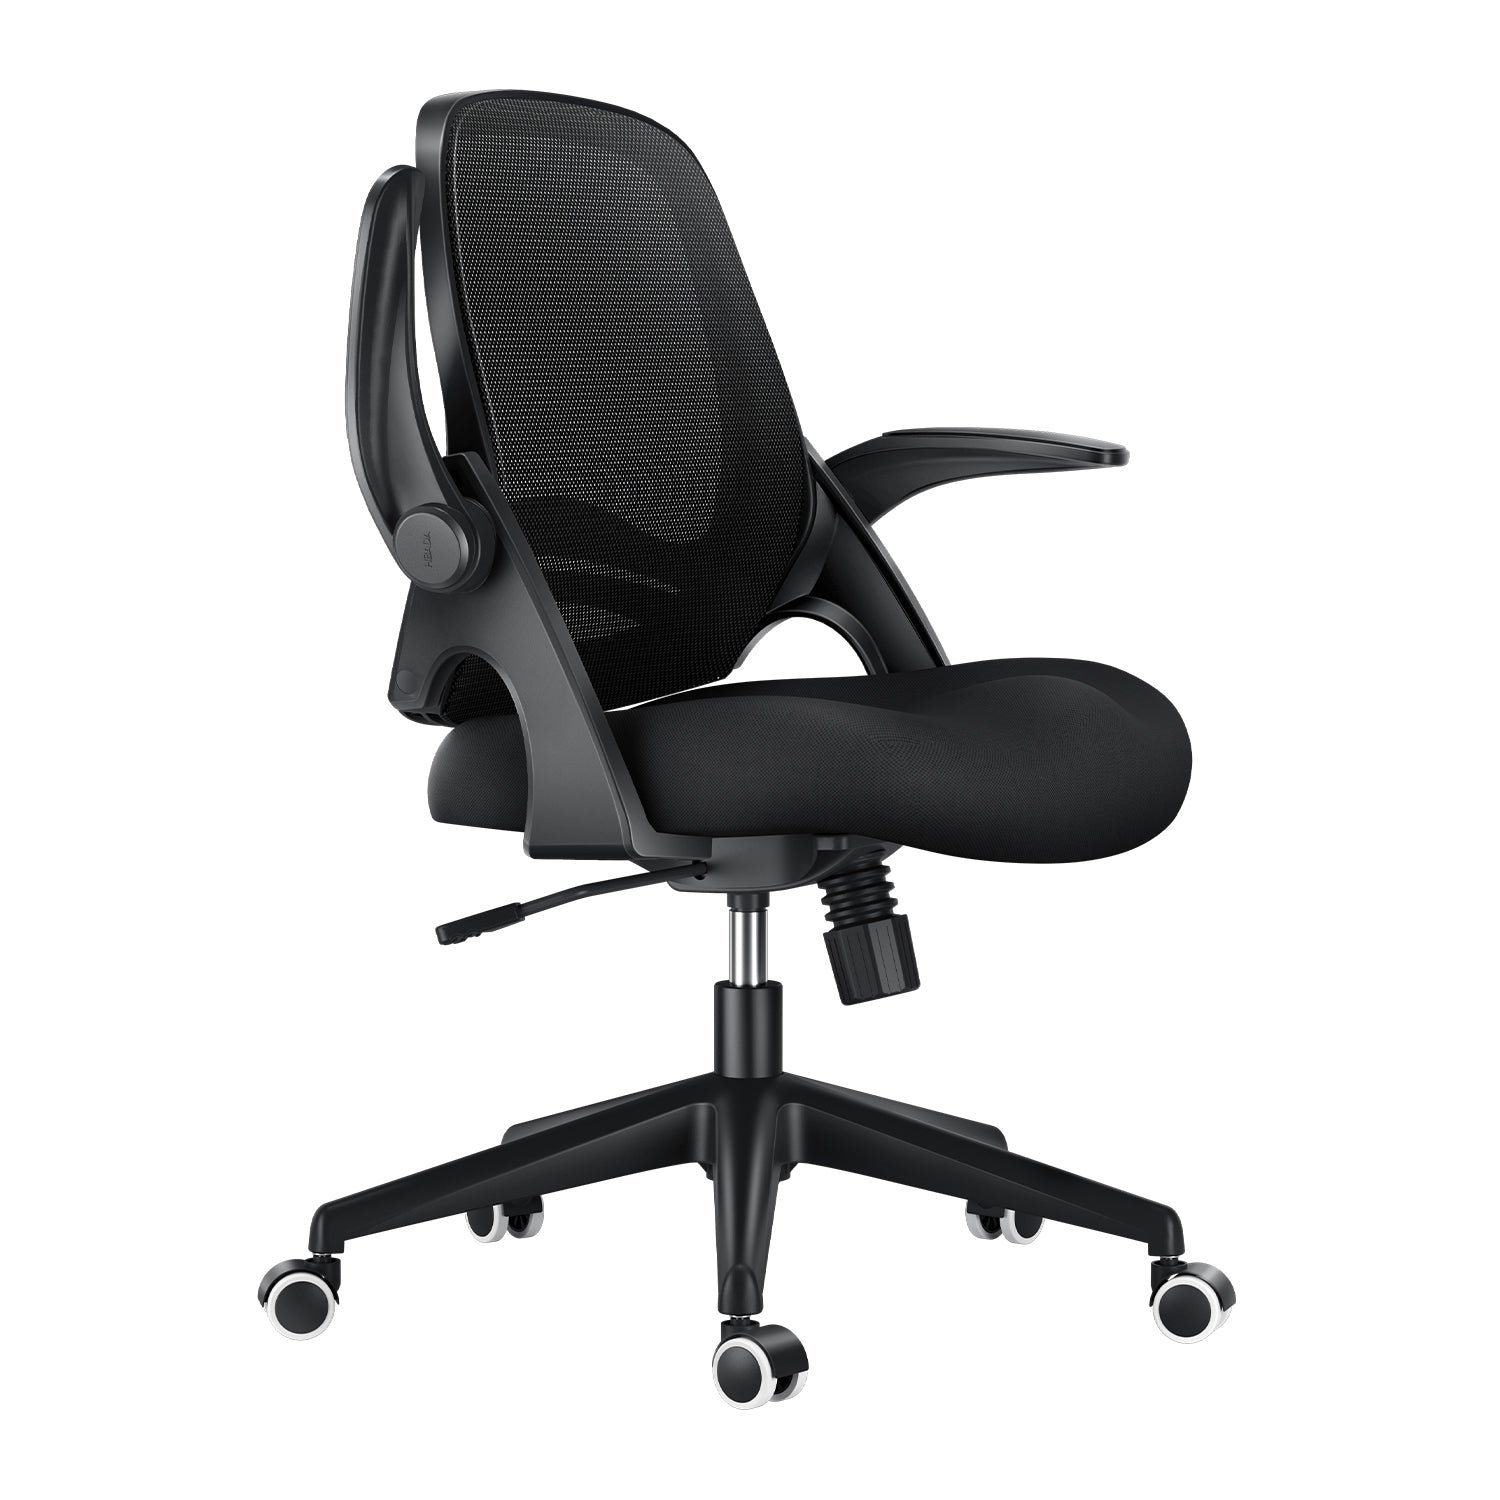 HBADA Office Chair,Black